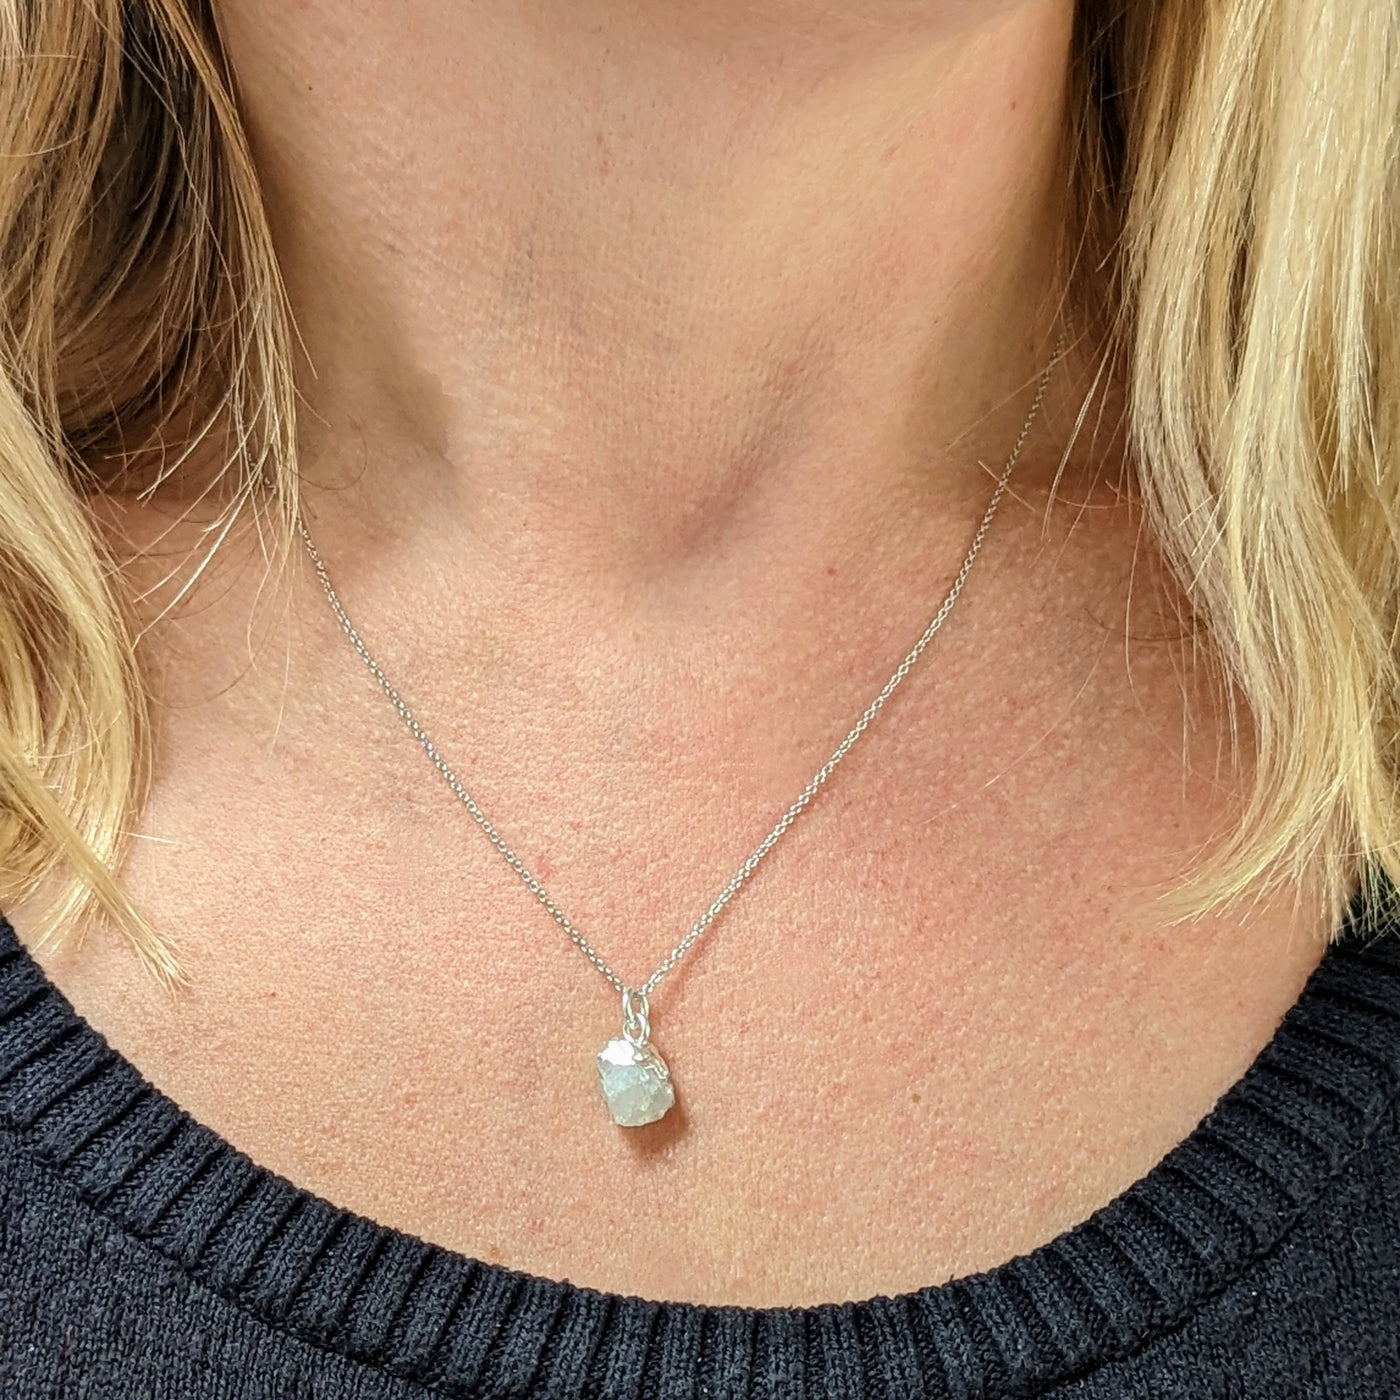 Moonstone June birthstone necklace